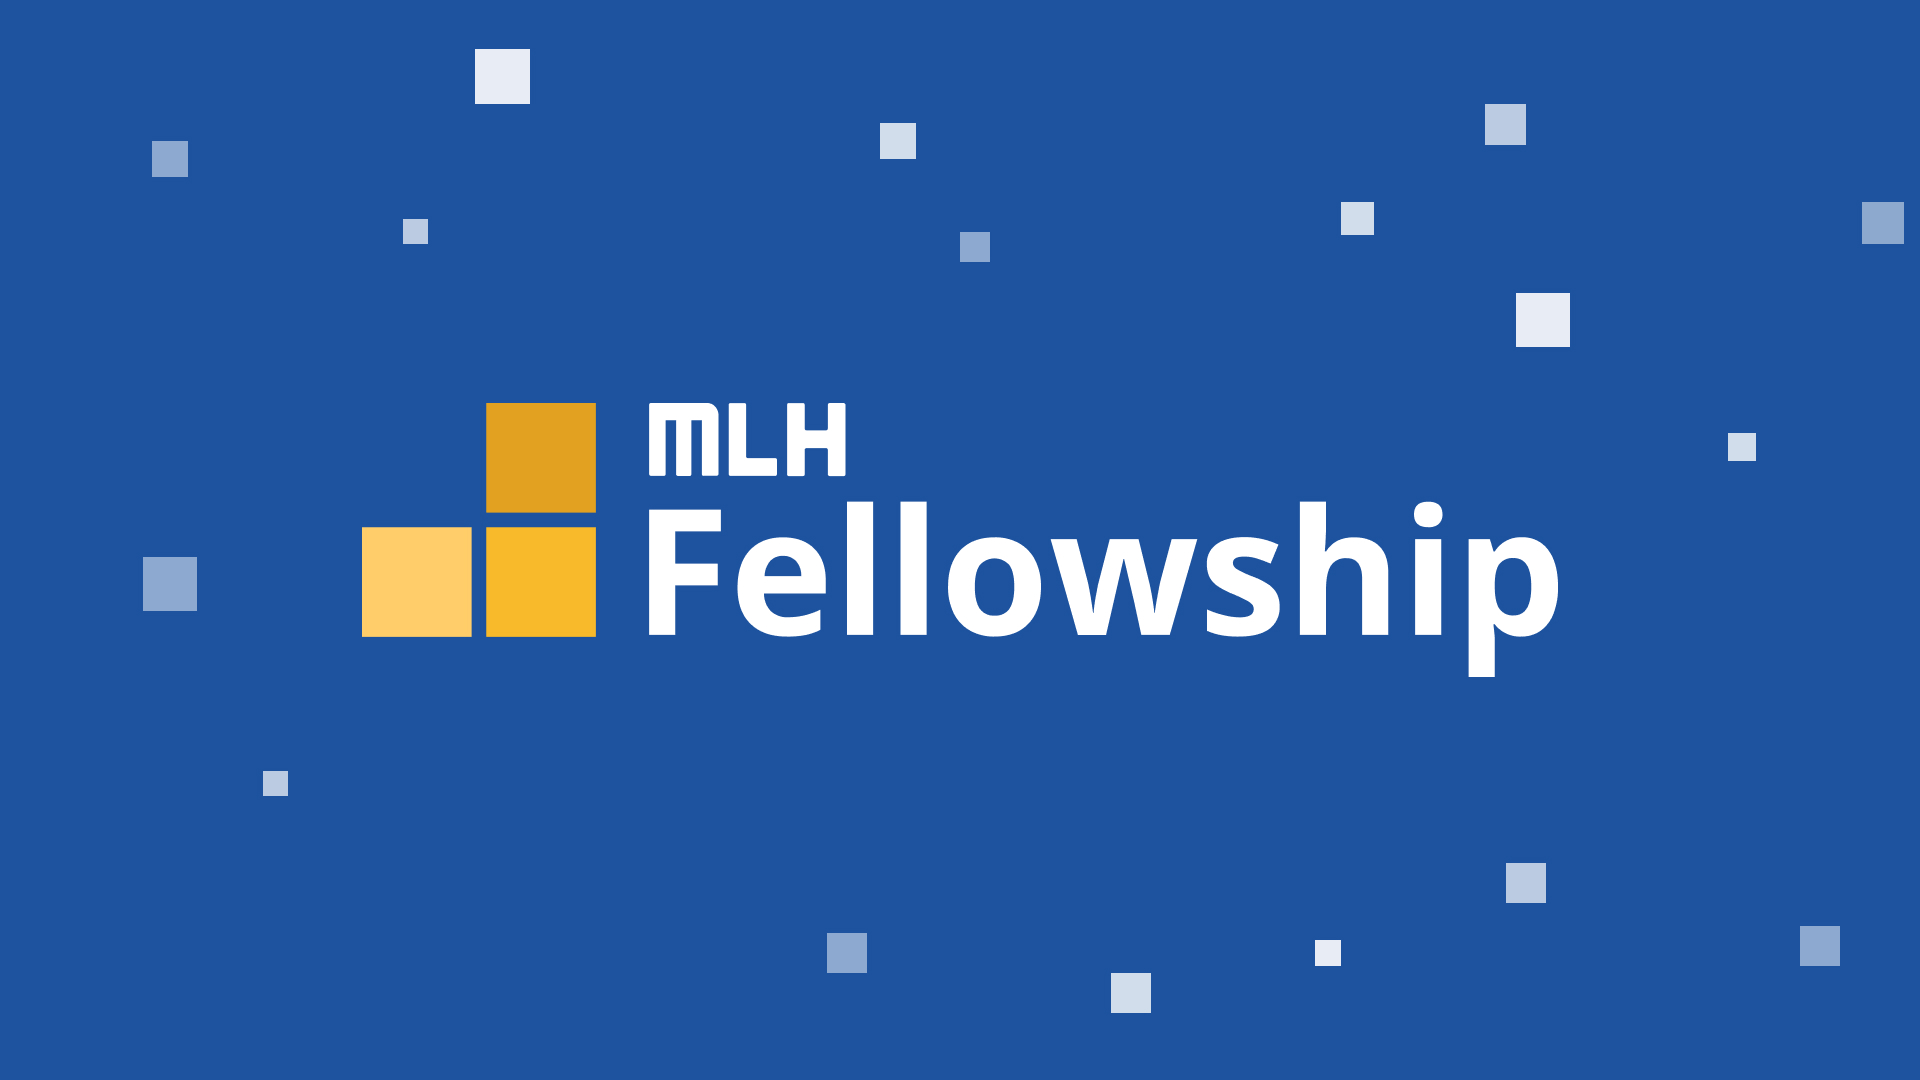 MLH Fellowship